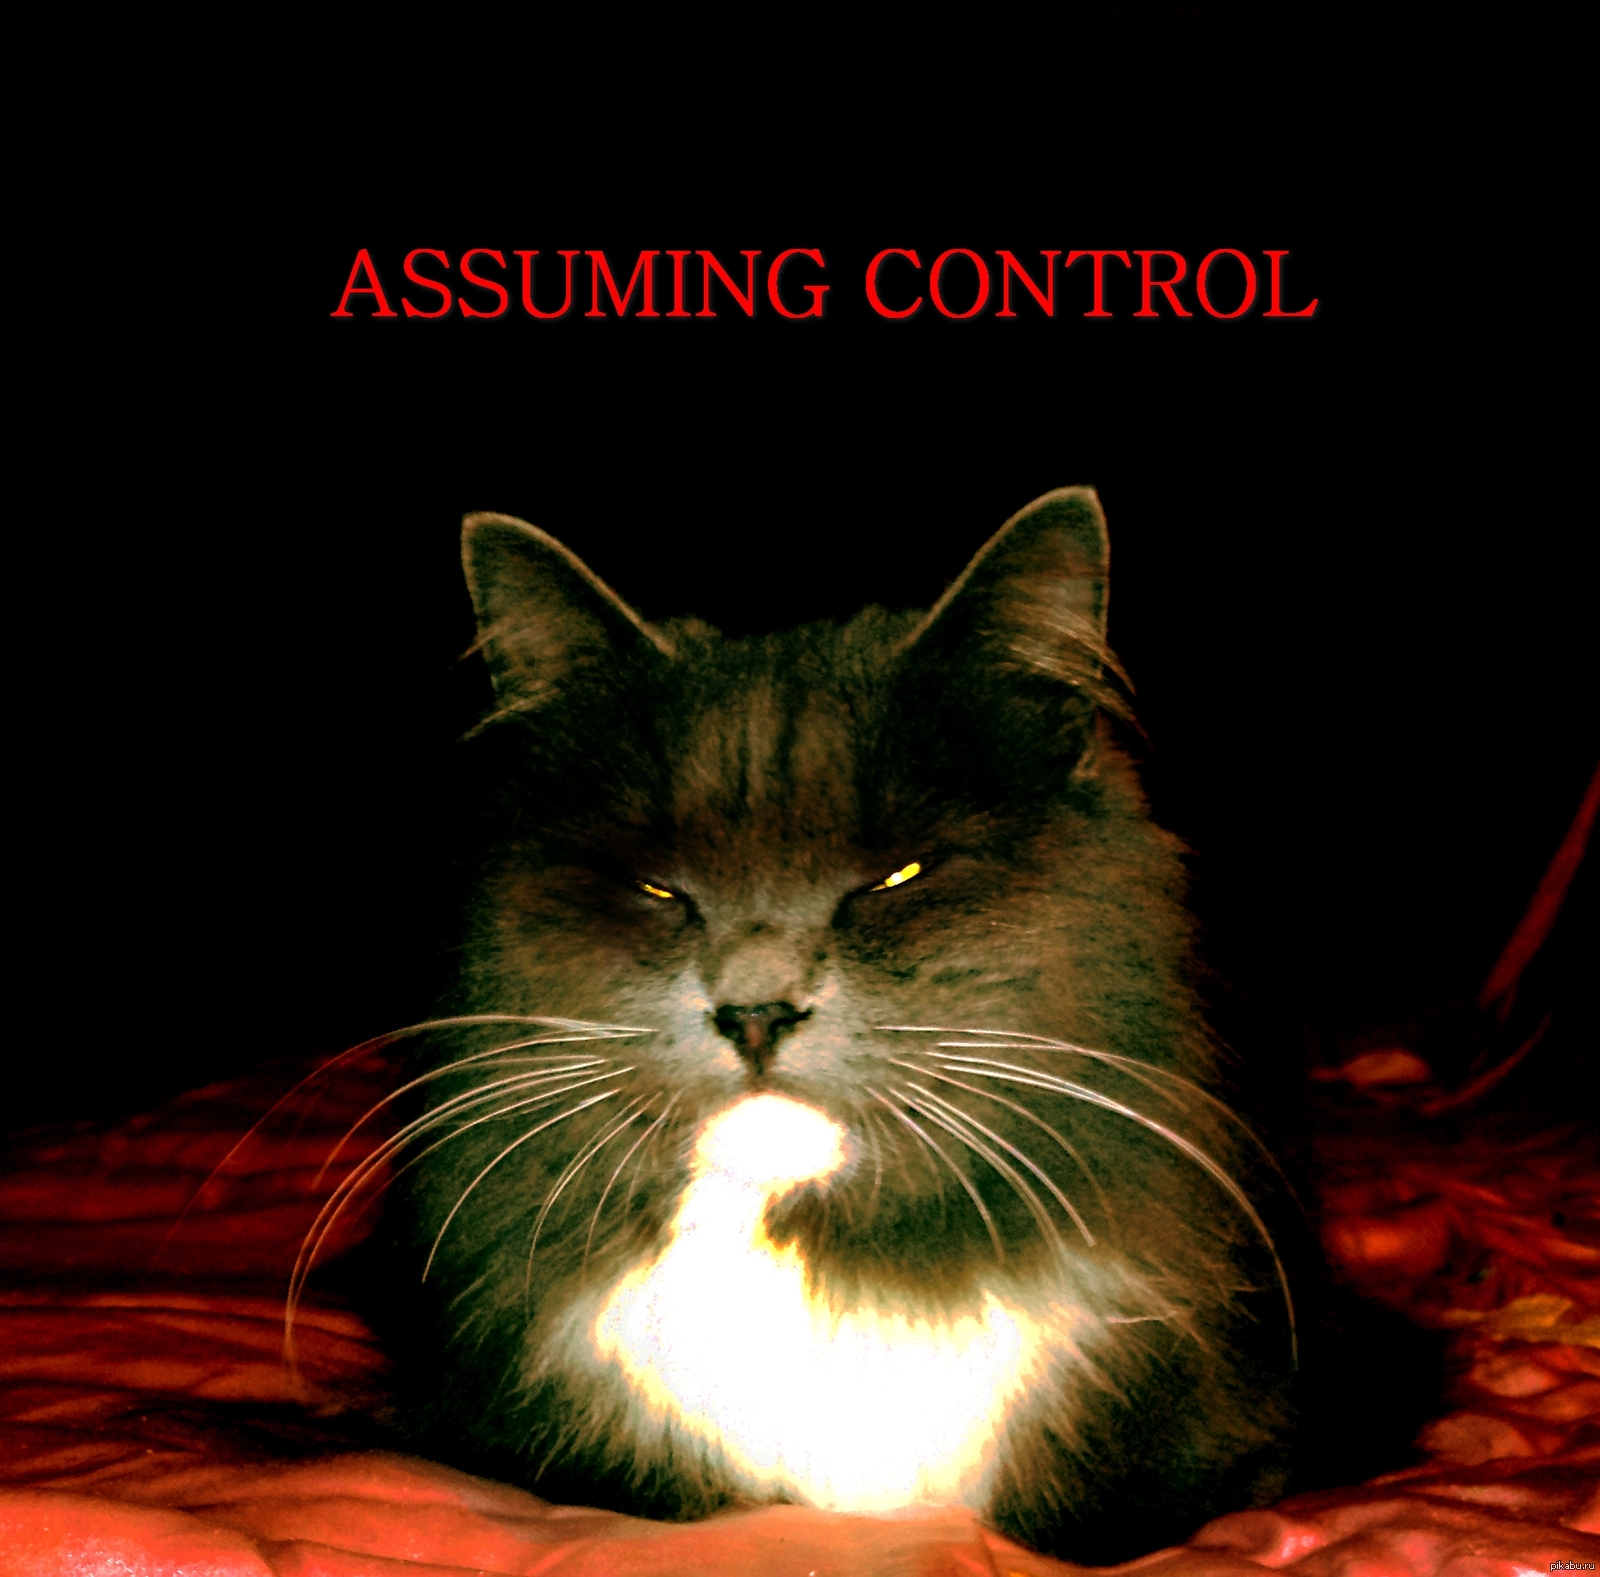 ASSUMING CONTROL - Who said Mass Effect?, Mass effect, Assuming Control, cat, Friday, My, My